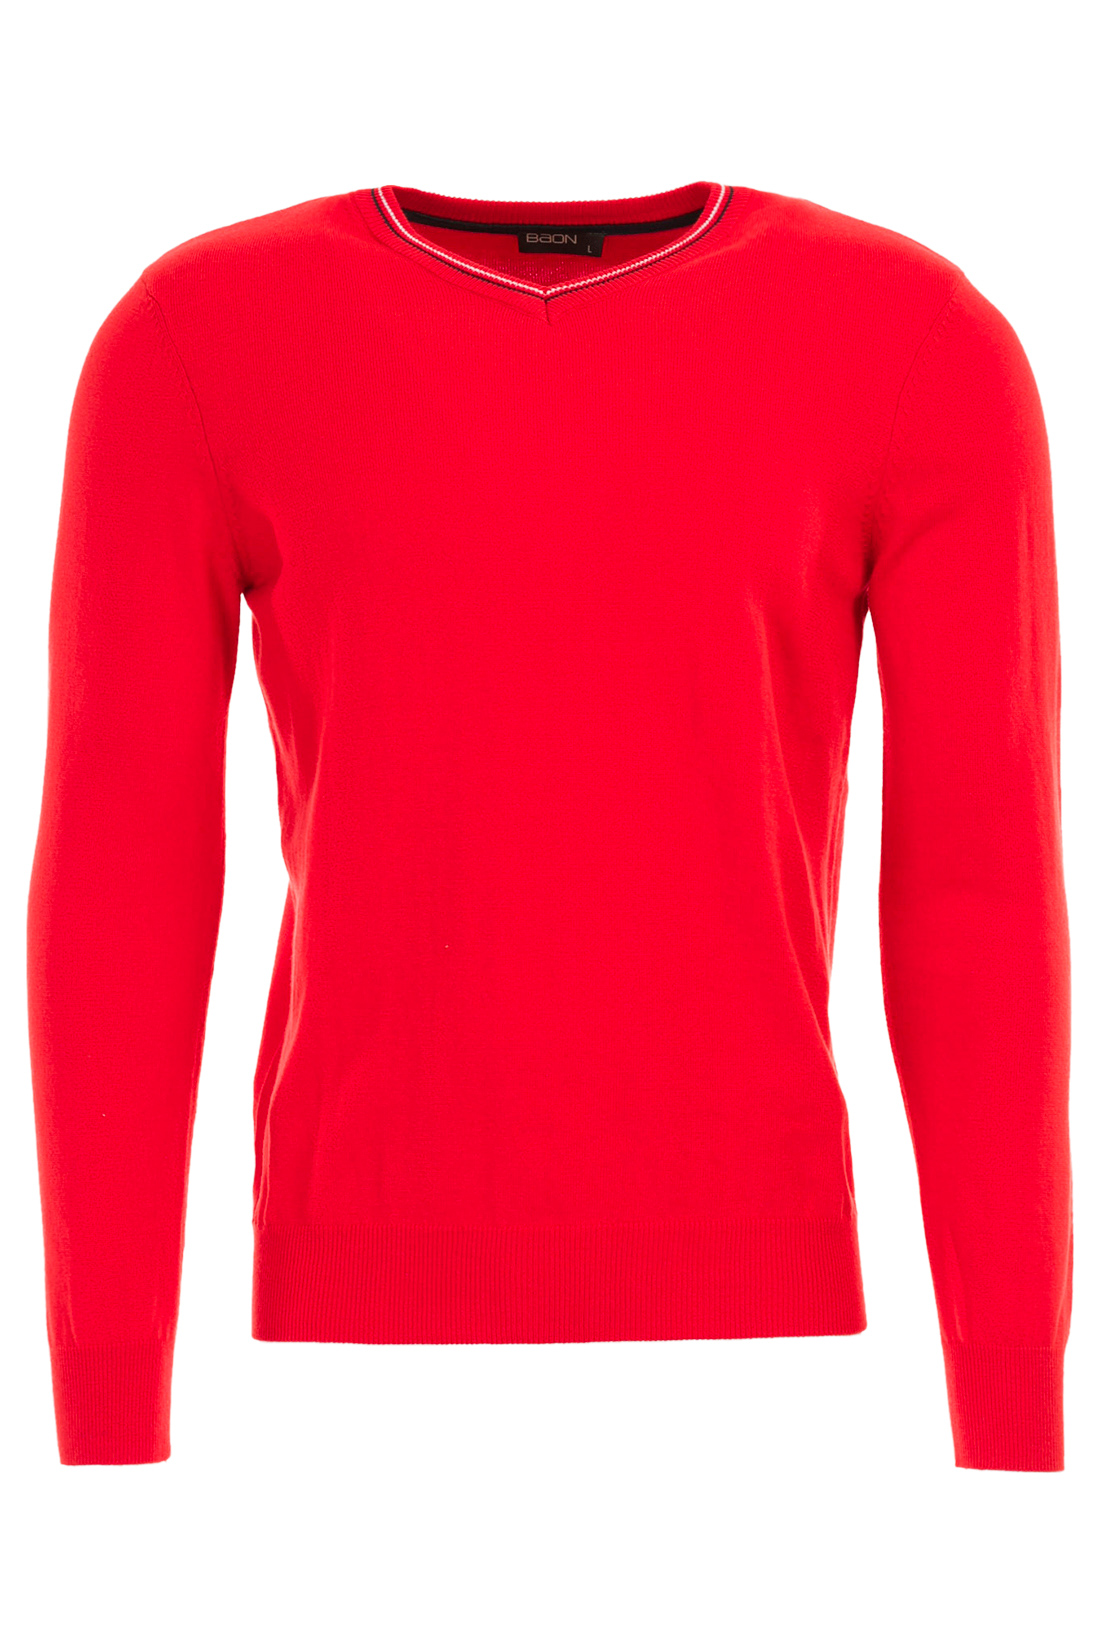 Пуловер с окантовкой на вырезе (арт. baon B637004), размер M, цвет красный Пуловер с окантовкой на вырезе (арт. baon B637004) - фото 5